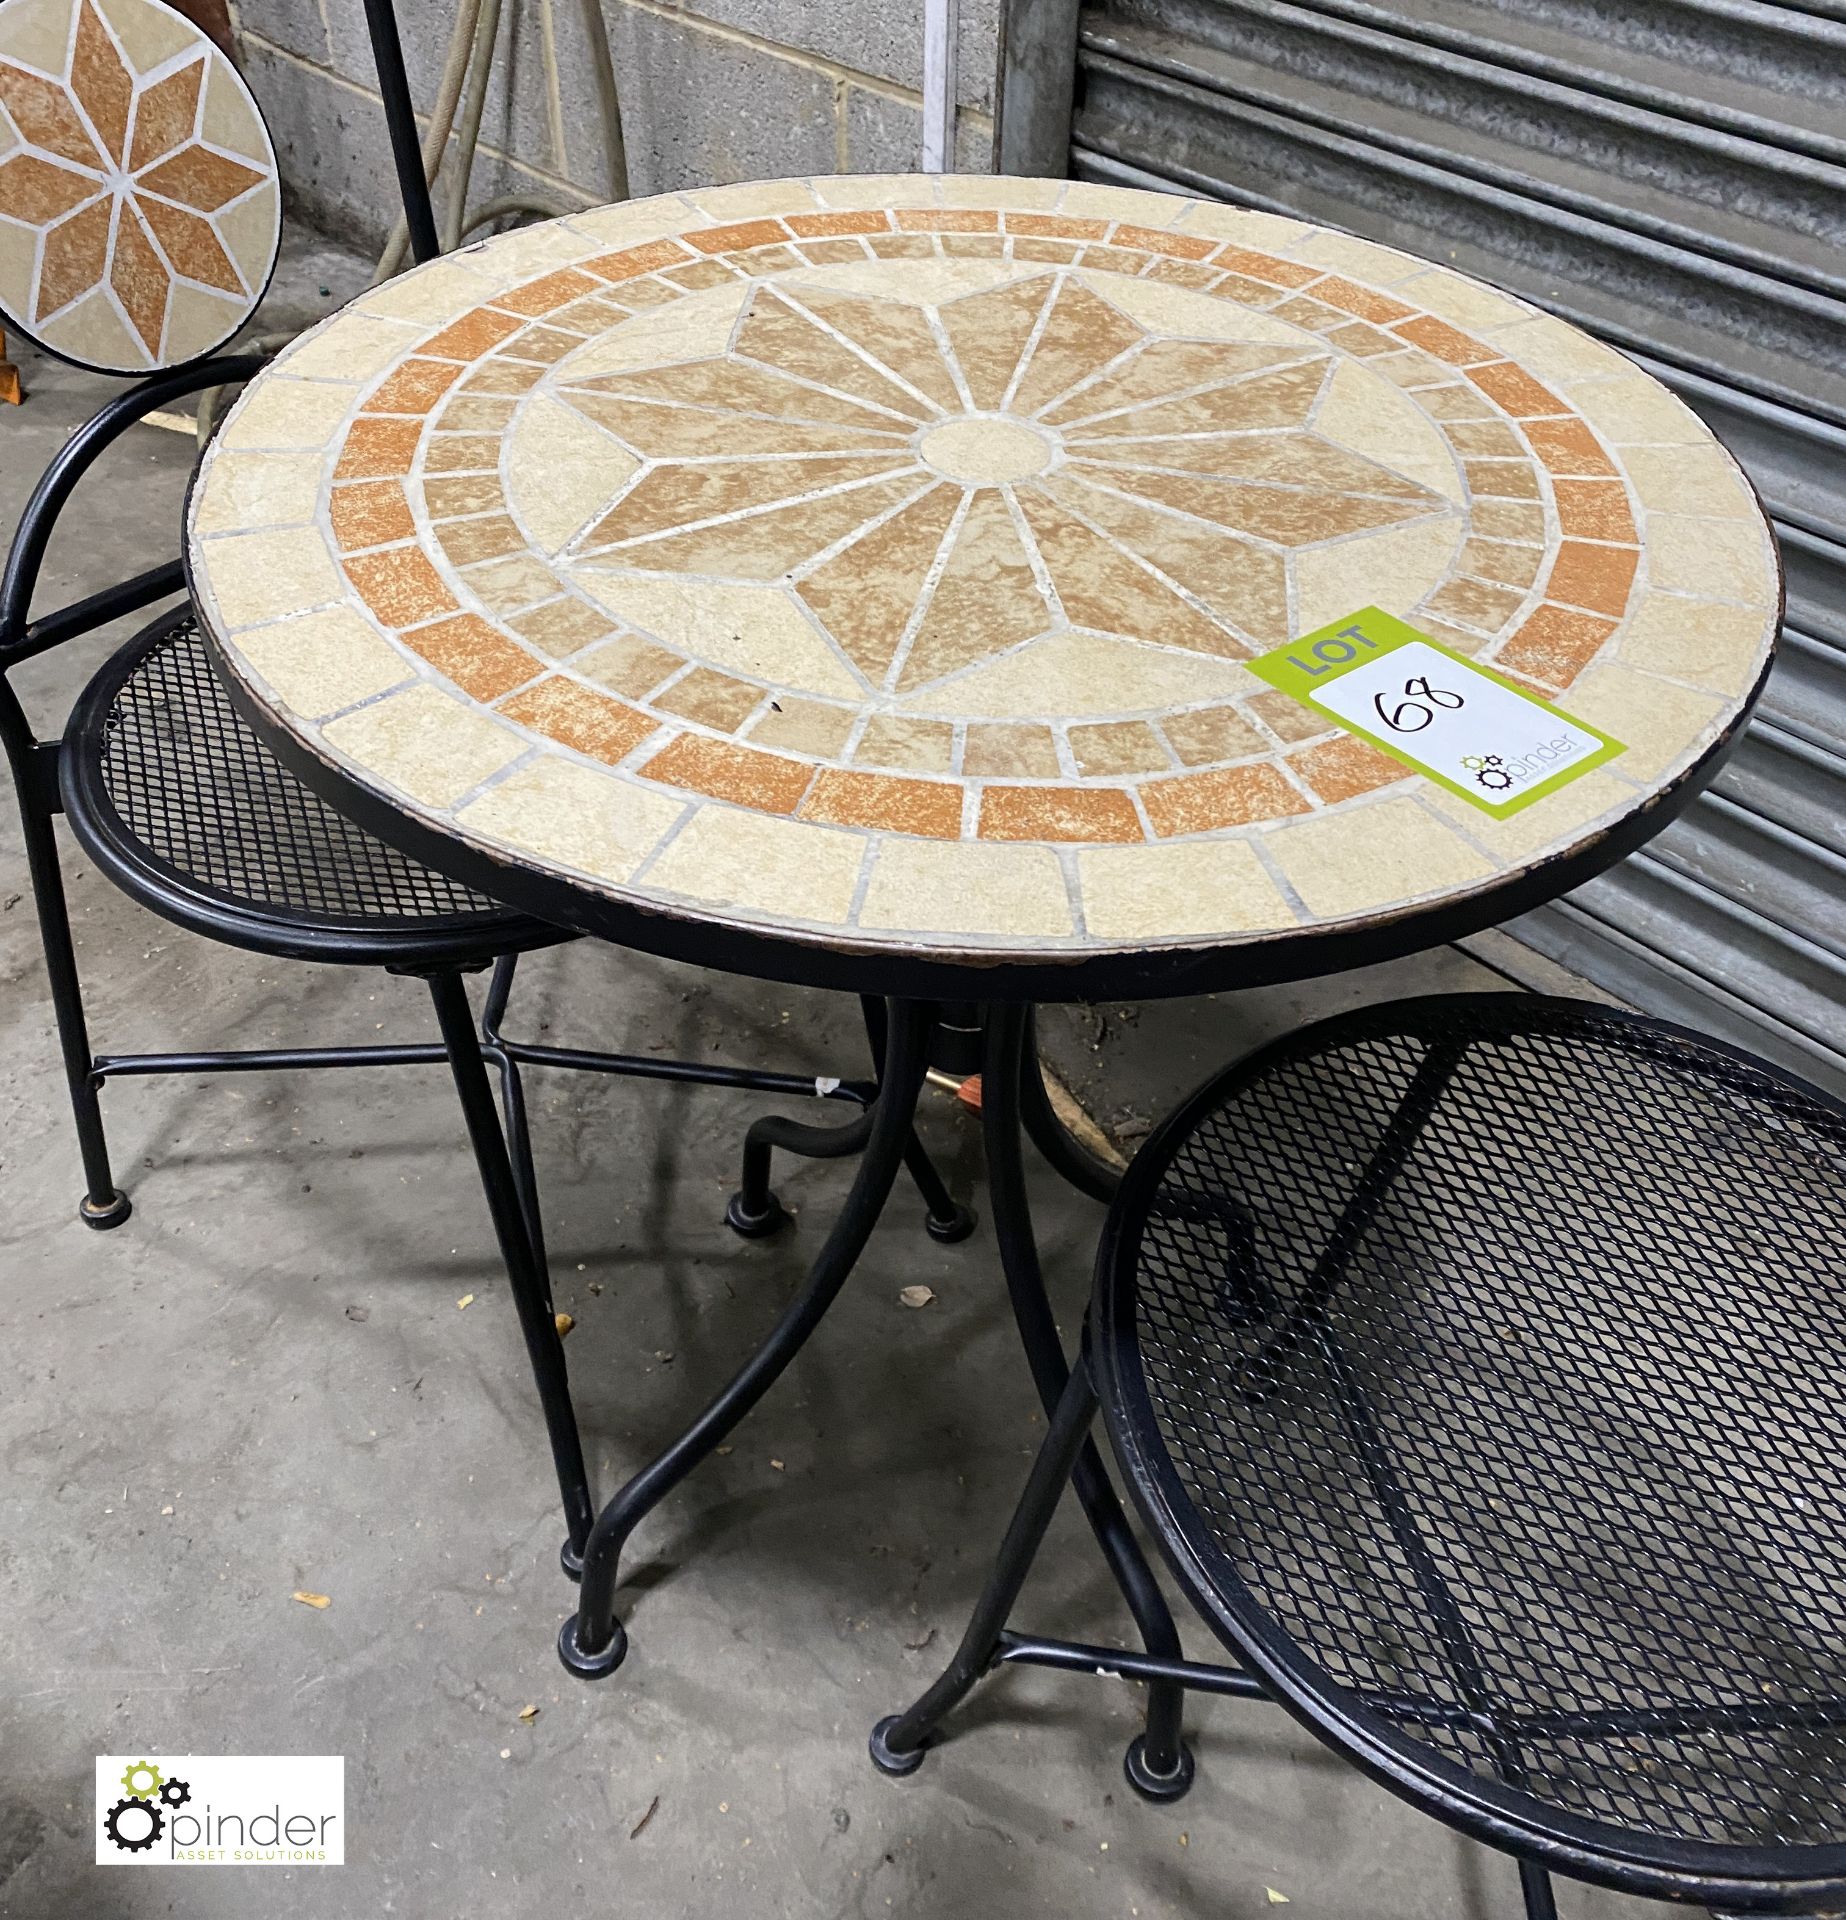 Circular tile top Café Table, 600mm diameter, with 2 café chairs - Image 2 of 4